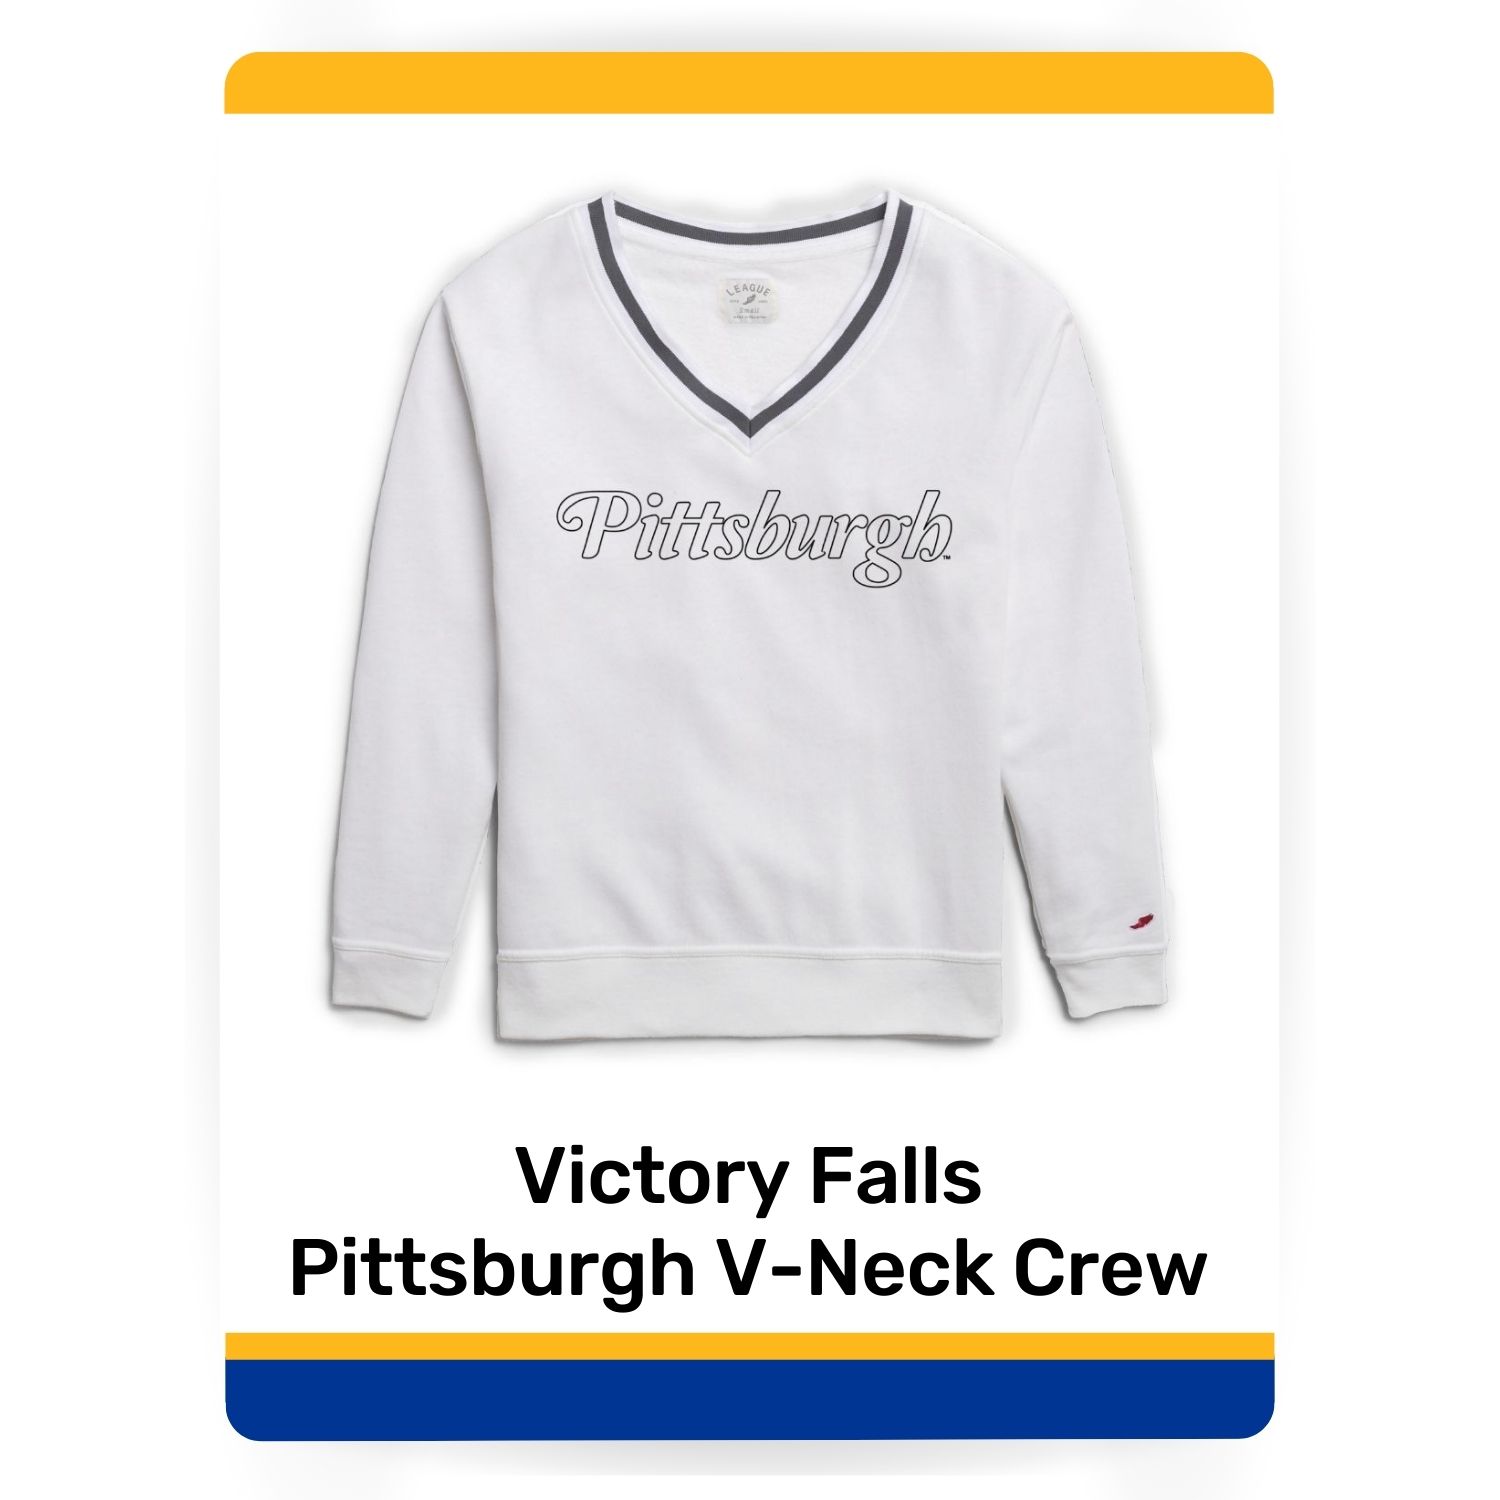 Victory Falls Pittsburgh V-Neck Crew